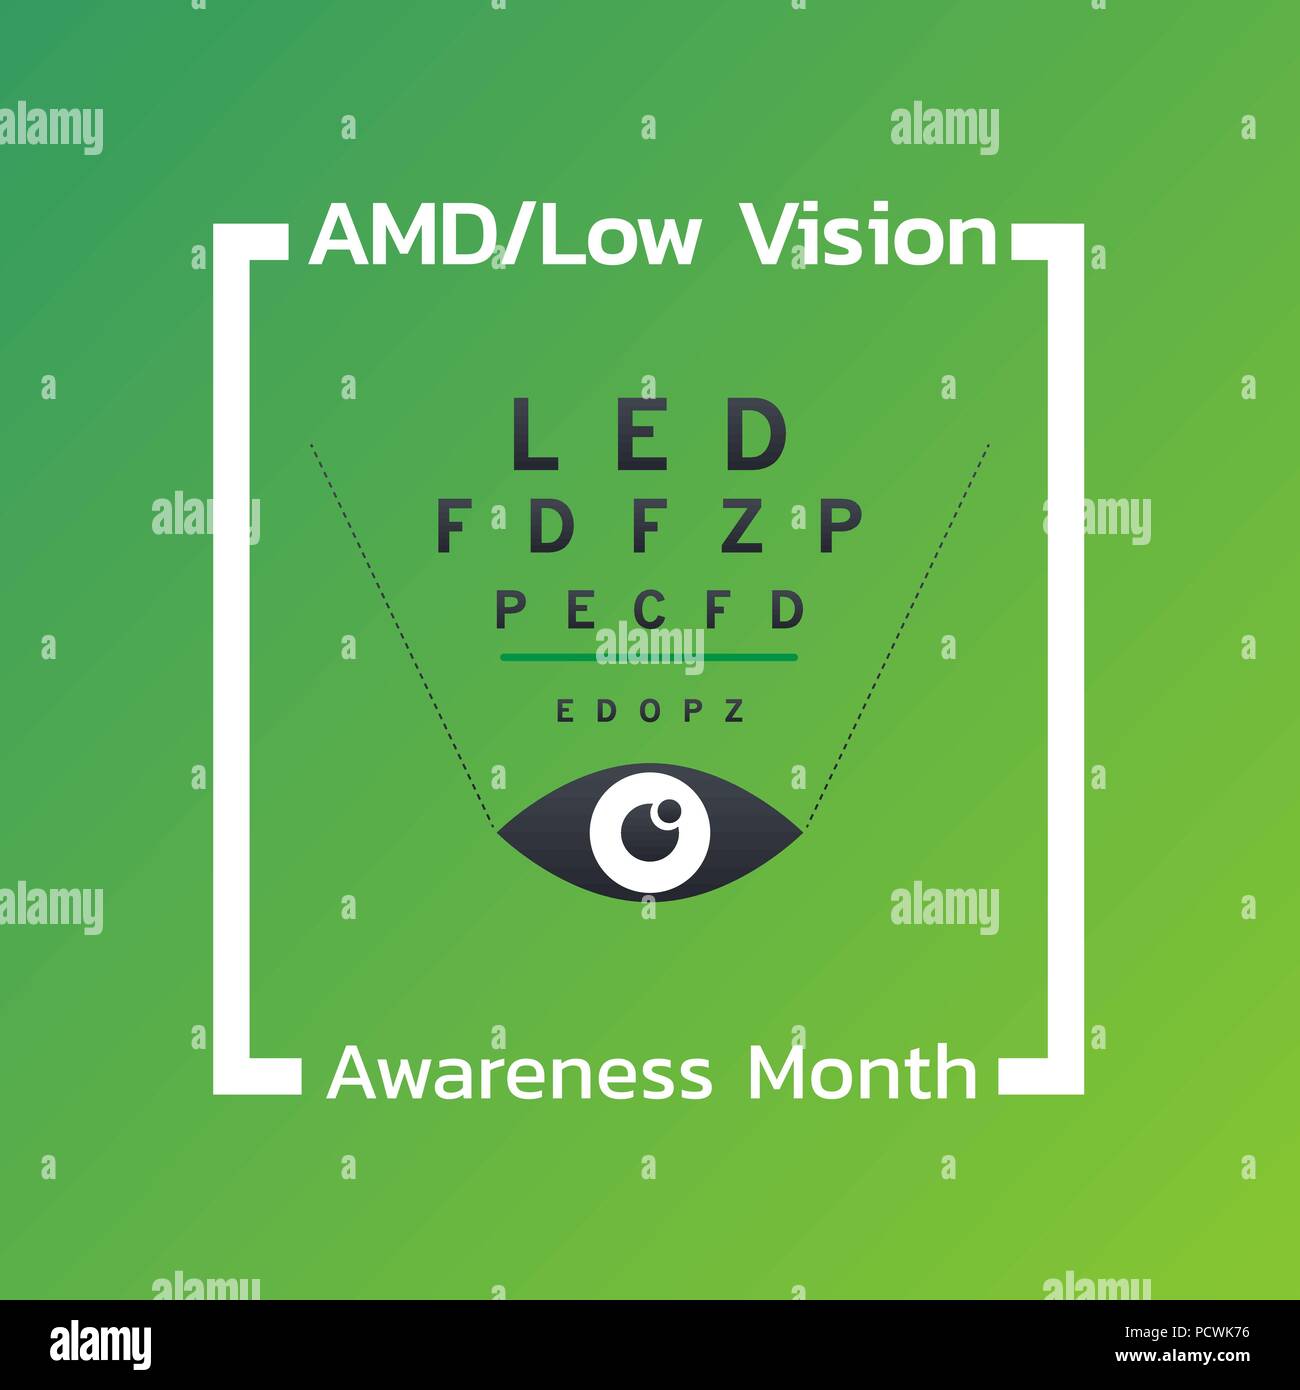 AMD/Low Vision ßtsein Monat Icon Design. Vector Illustration Stock Vektor